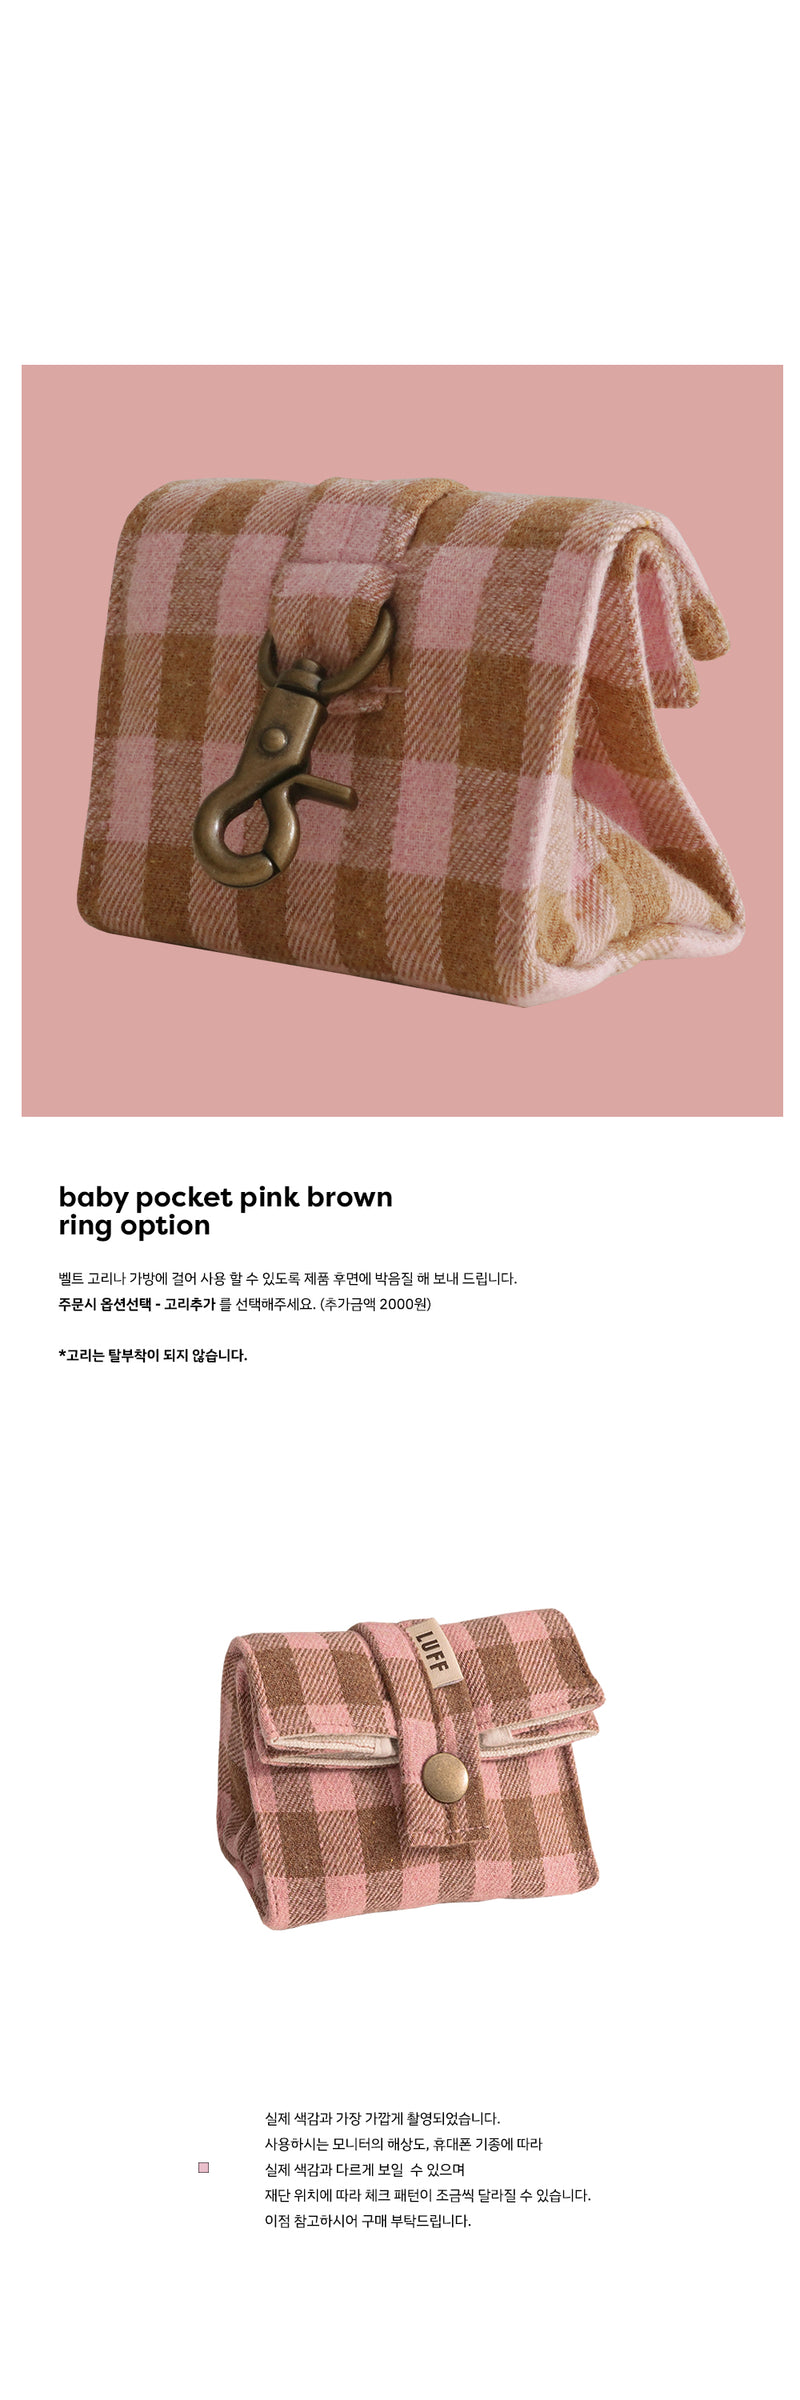 baby pocket - pink brown